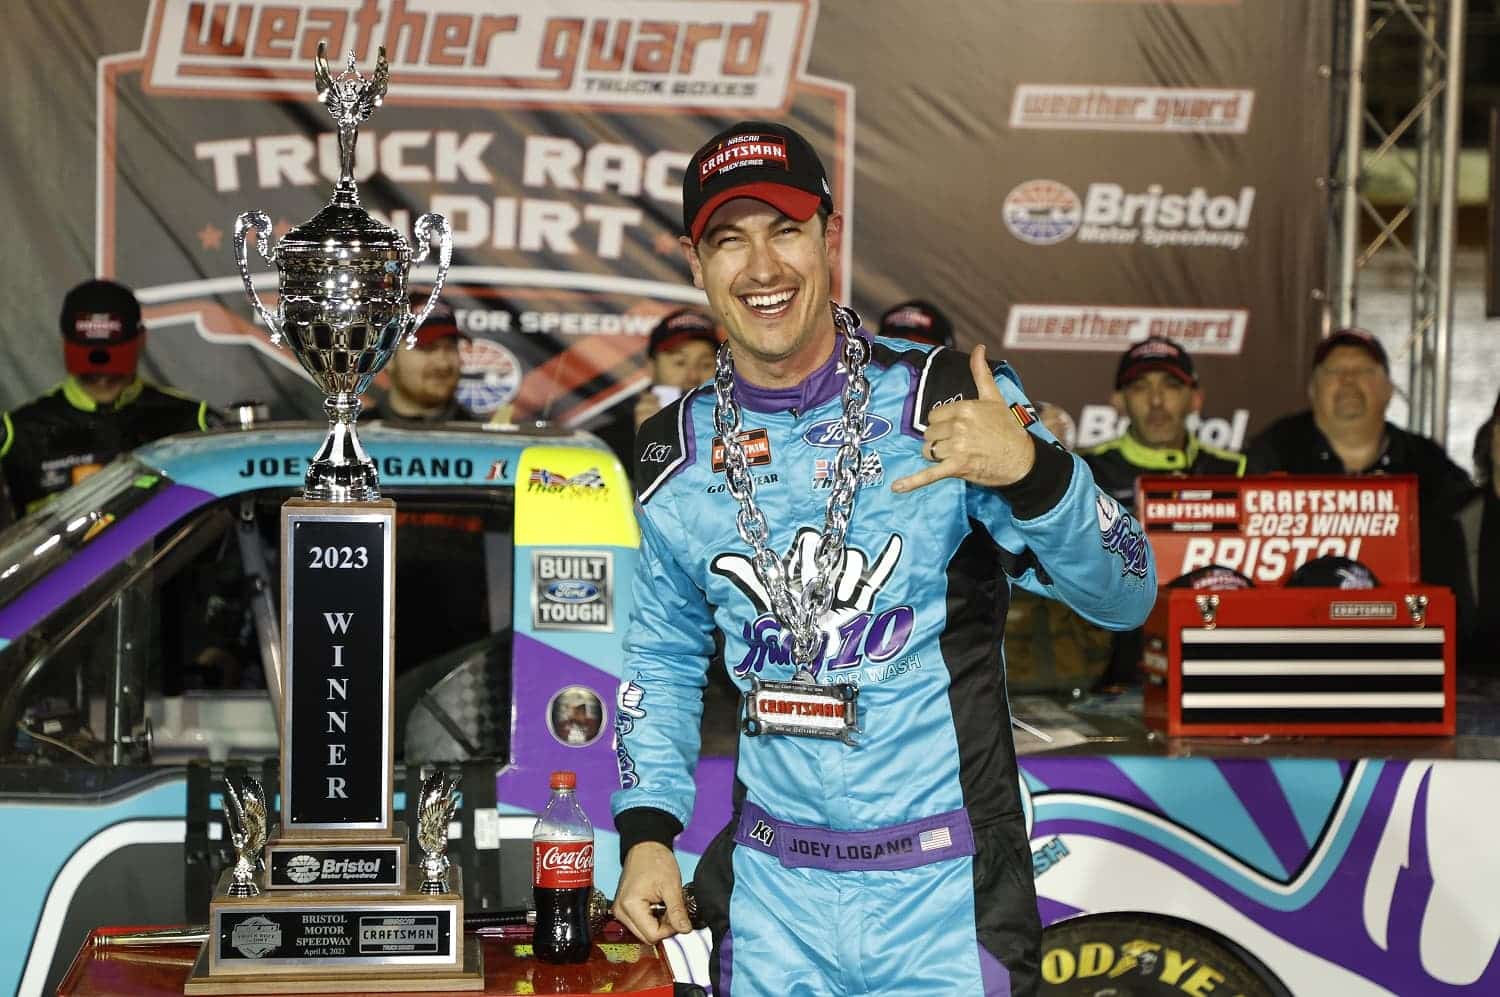 Joey Logano celebrates winning the NASCAR Craftsman Truck Series Weather Guard Truck Race on Dirt at Bristol Motor Speedway on April 8, 2023. | Jared C. Tilton/Getty Images